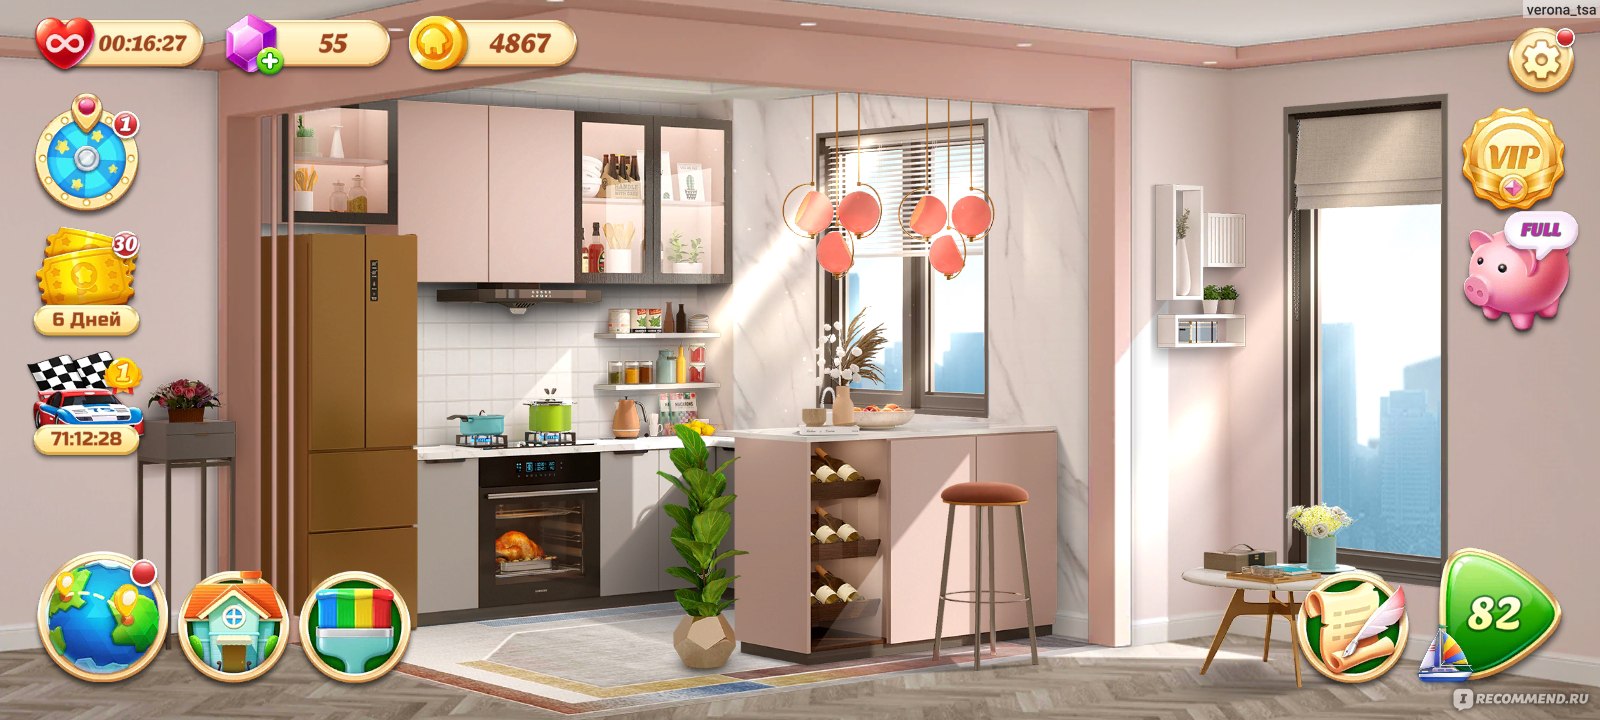 Скачать Design My Home Makeover: Words of Dream House Game на андроид APK v бесплатно